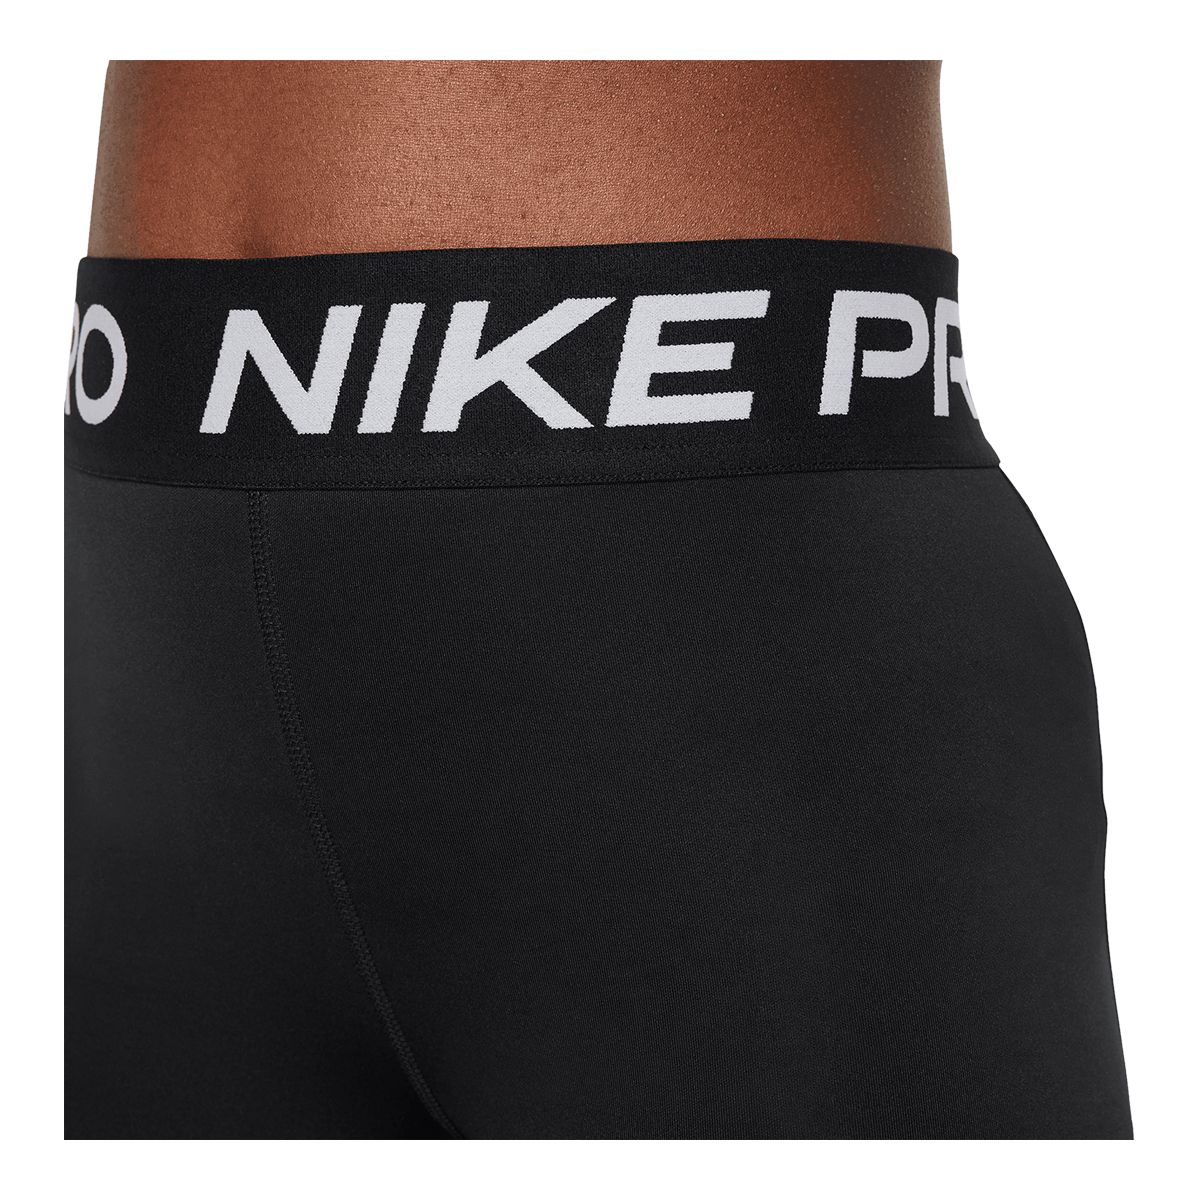 Nike Pro Girls Capri (Black White) Small Girls - Central Sports